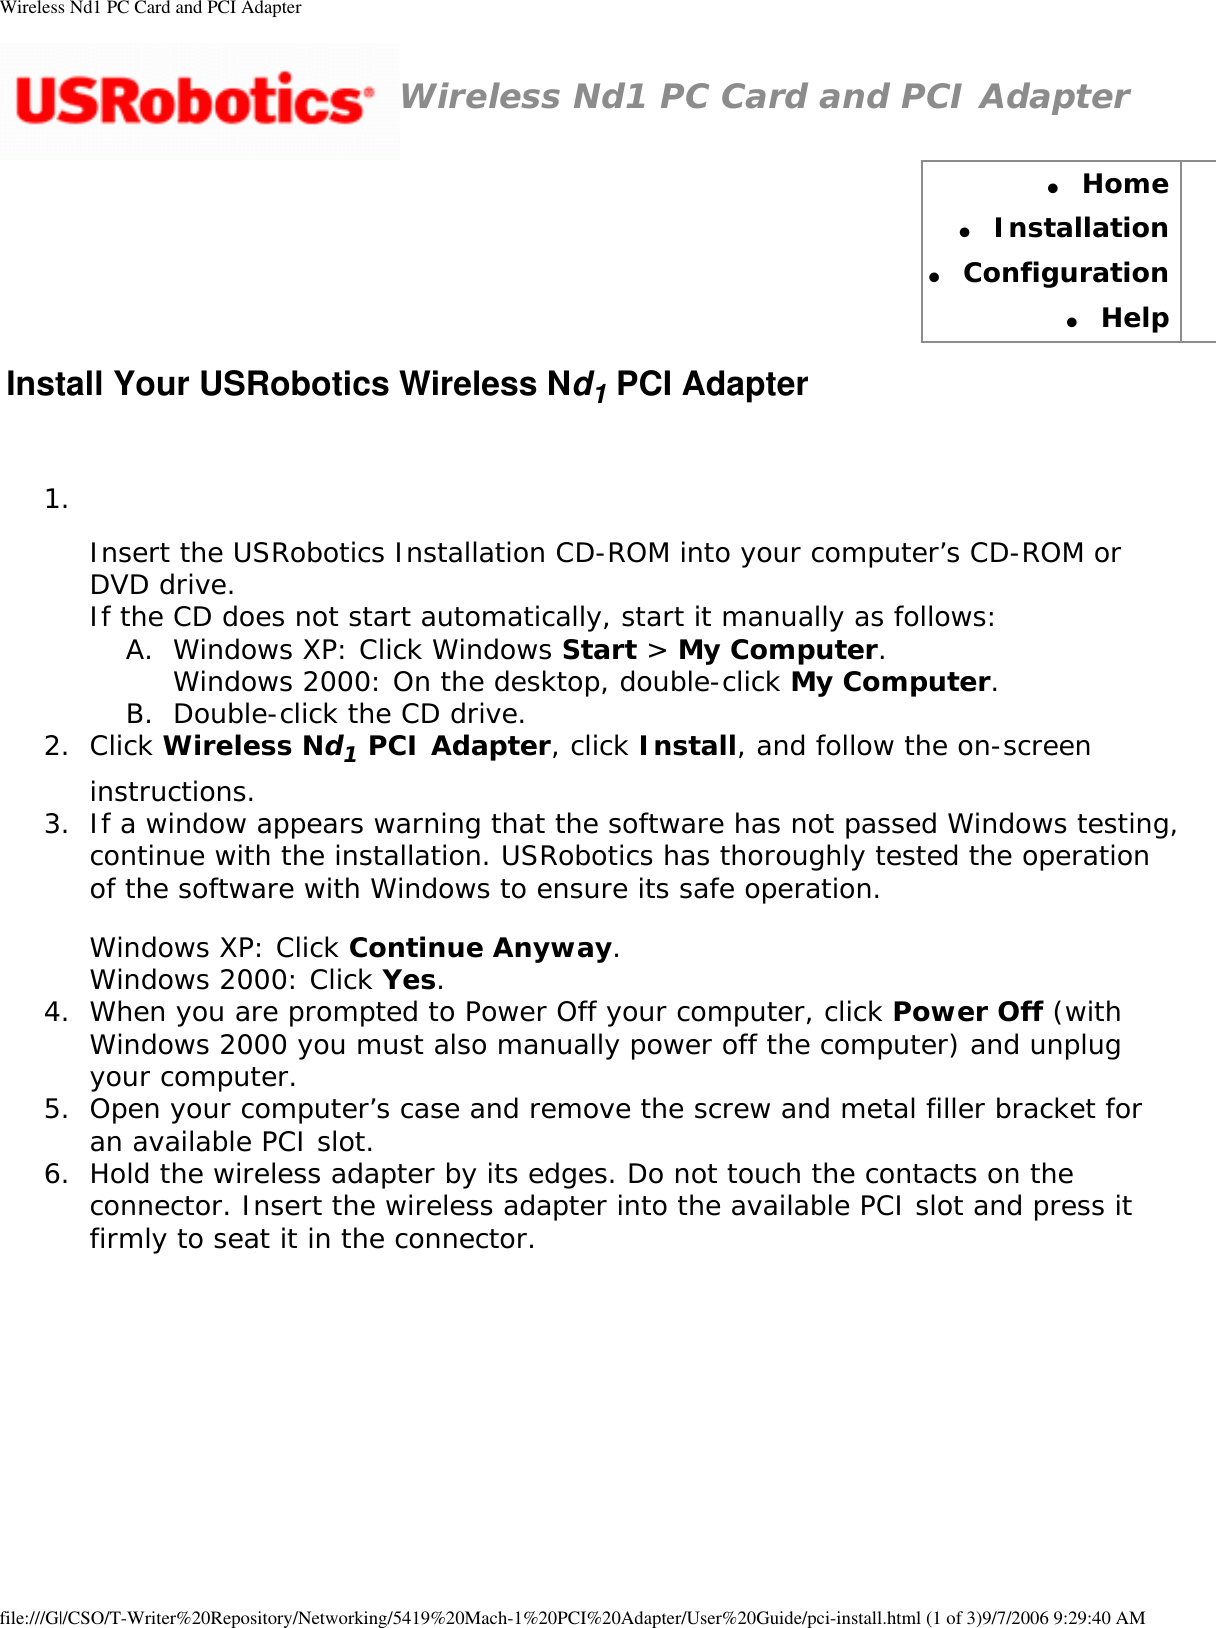 Page 9 of GemTek Technology C950622G Wireless Nd1 PC Card User Manual Wireless Nd1 PC Card and PCI Adapter